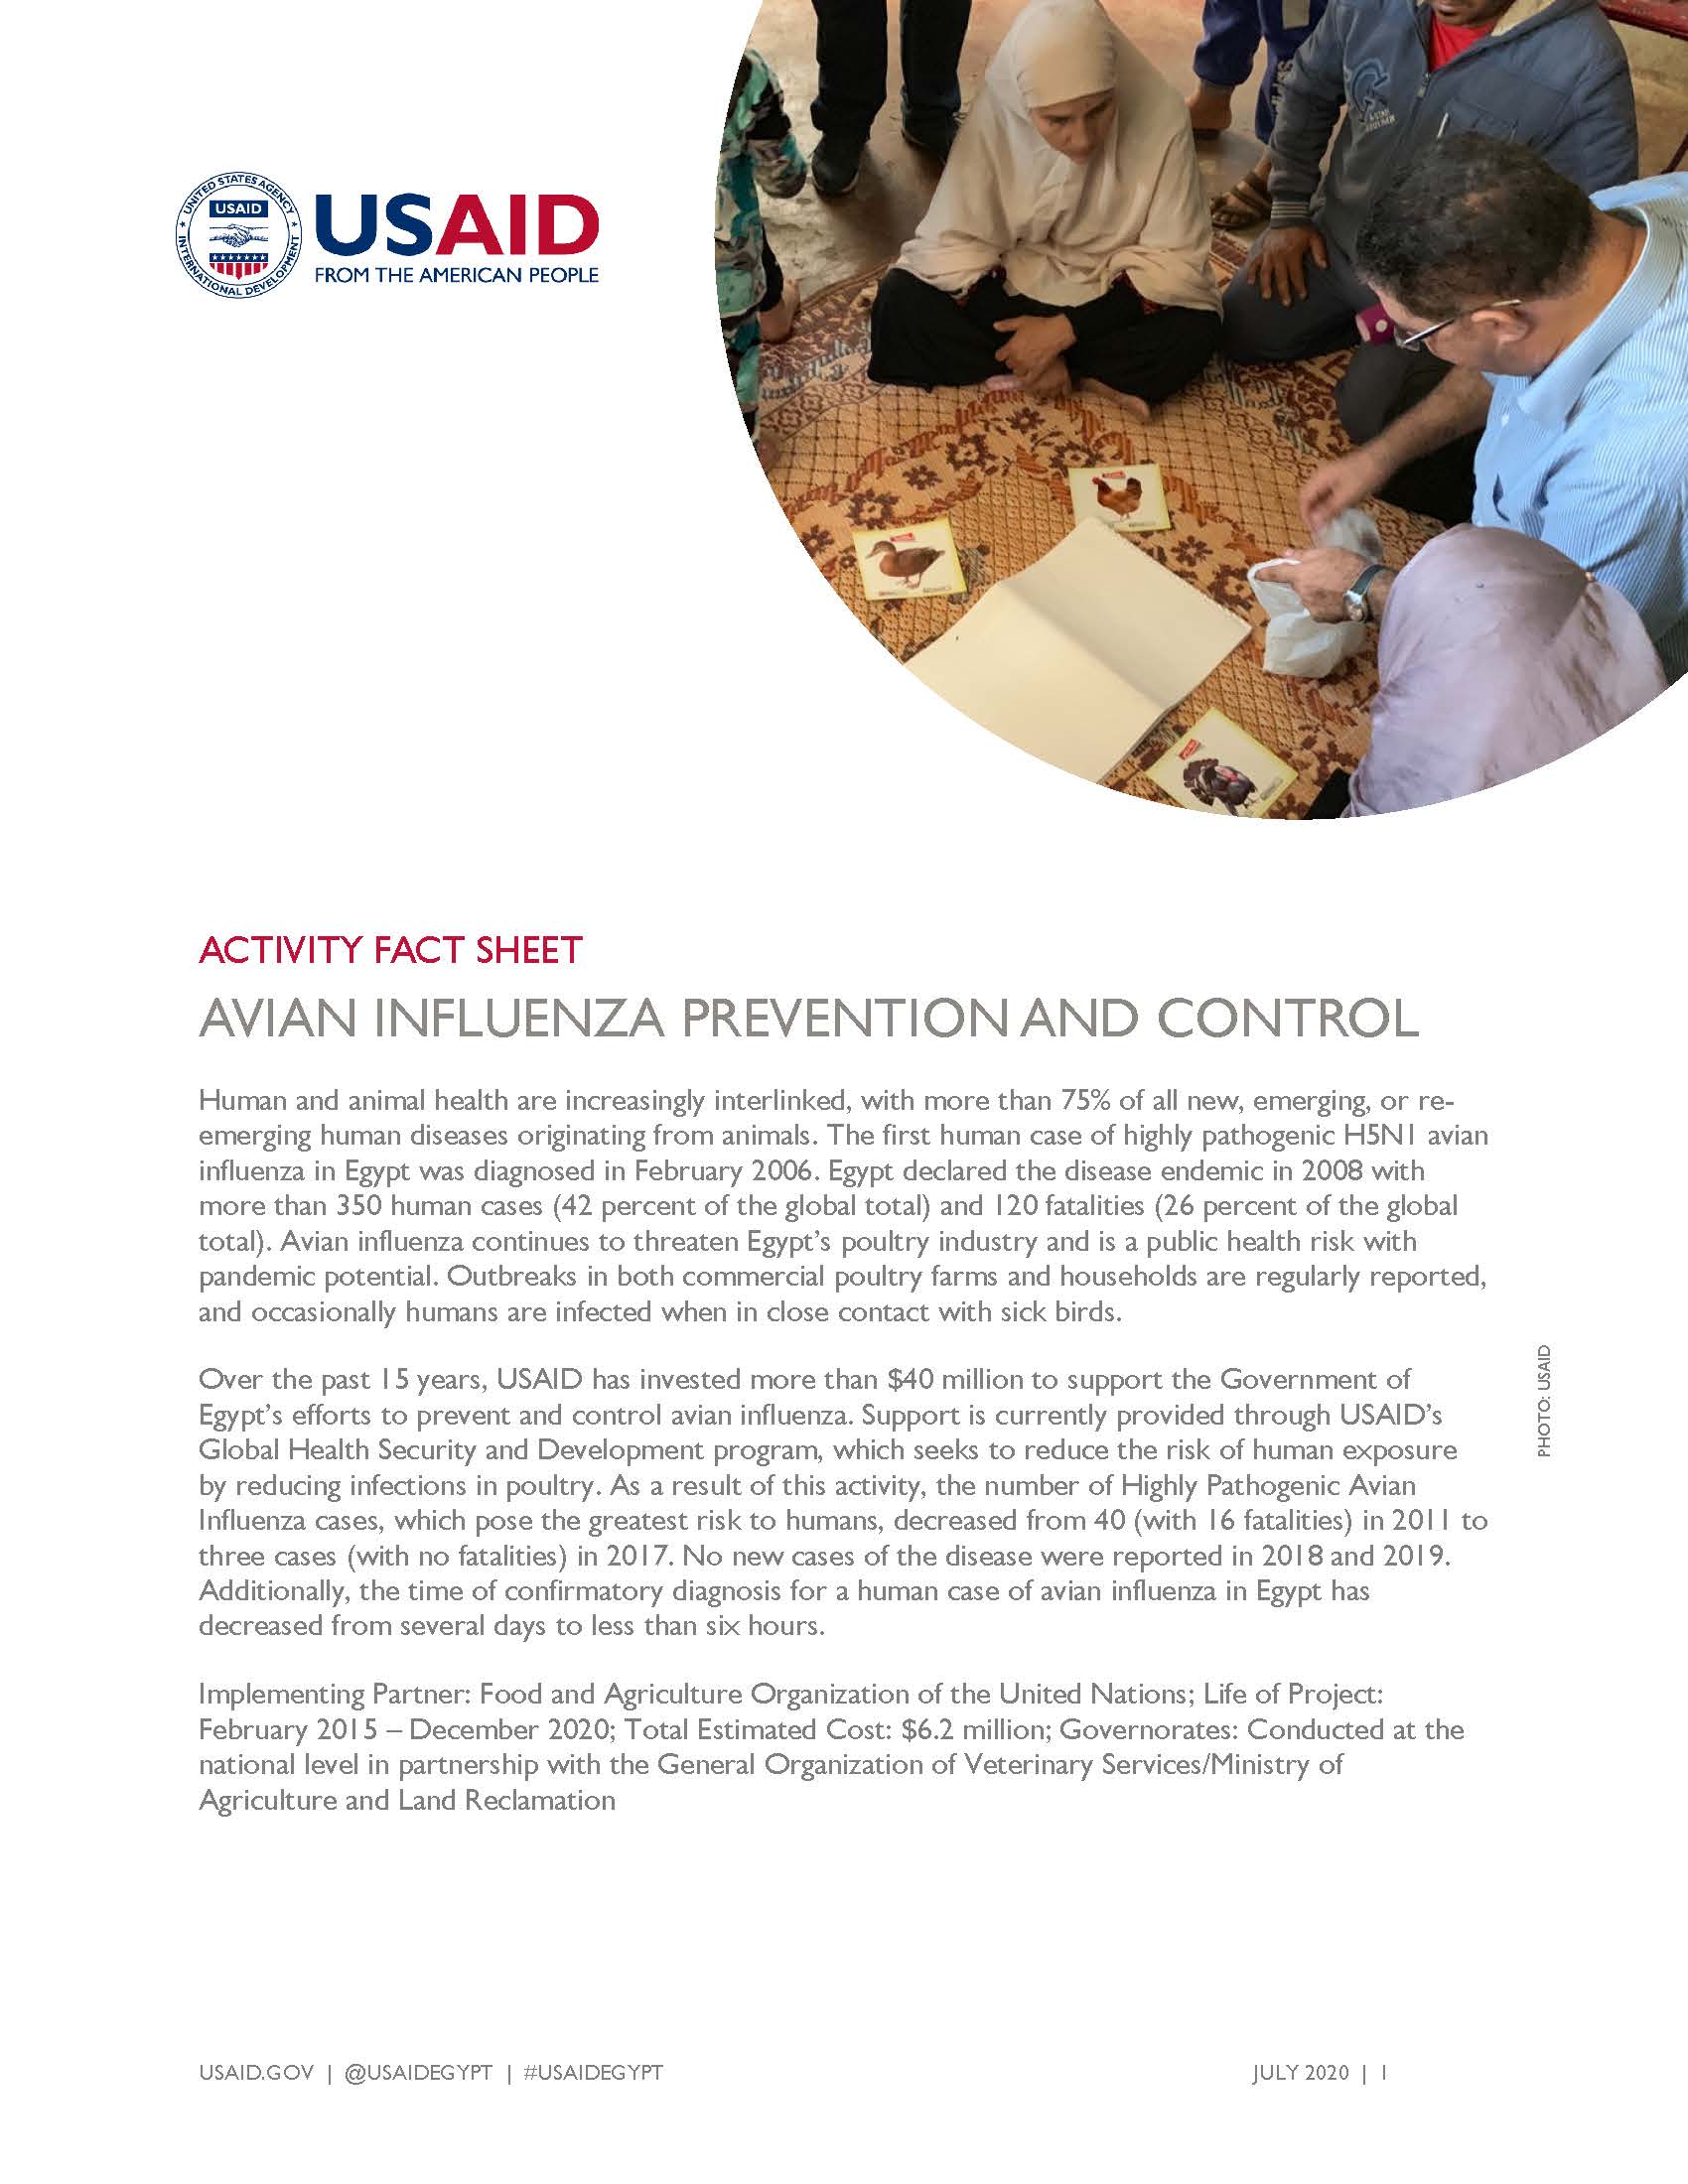 USAID/Egypt Activity Fact Sheet: Avian Influenza